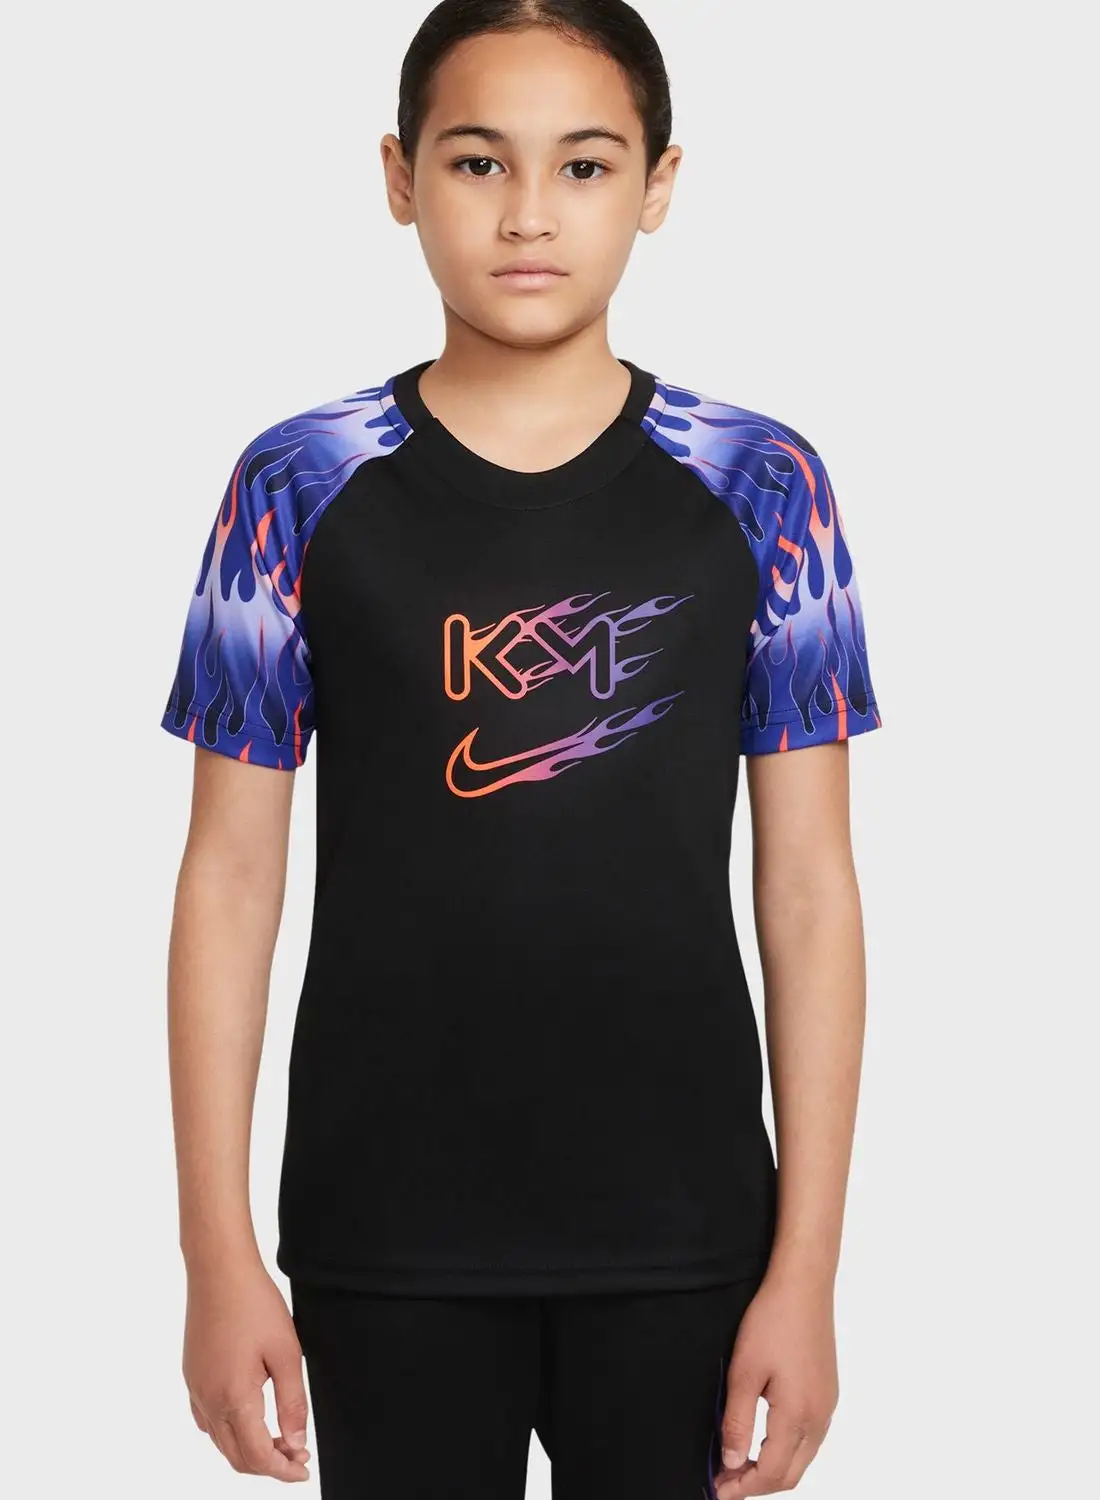 Nike Youth Dri-Fit T-Shirt